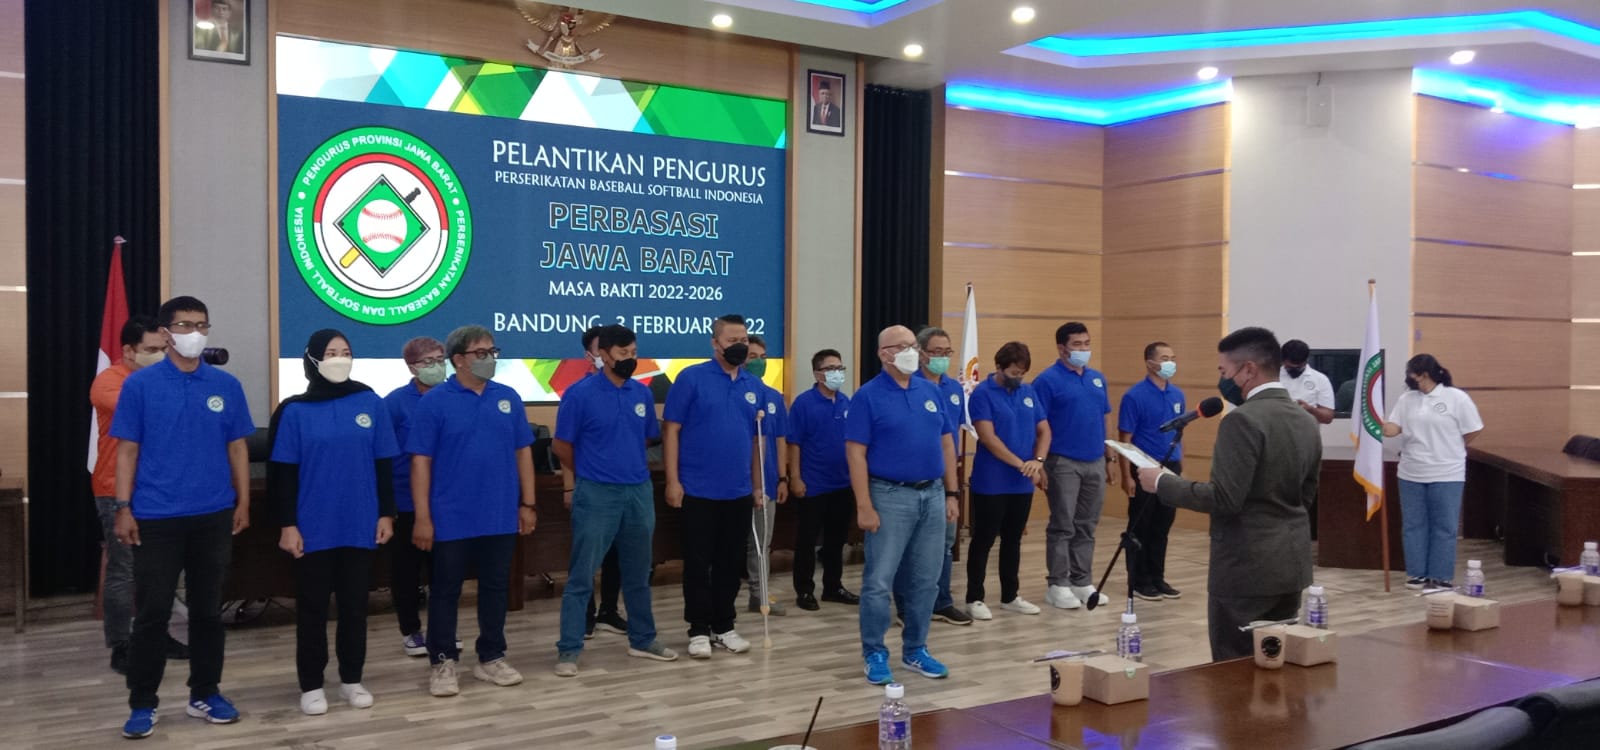 Pelantikan pengurus baru PERBASASI Jawa barat periode 2022-2026. Kamis (3/1). Foto. Sandi Nugraha